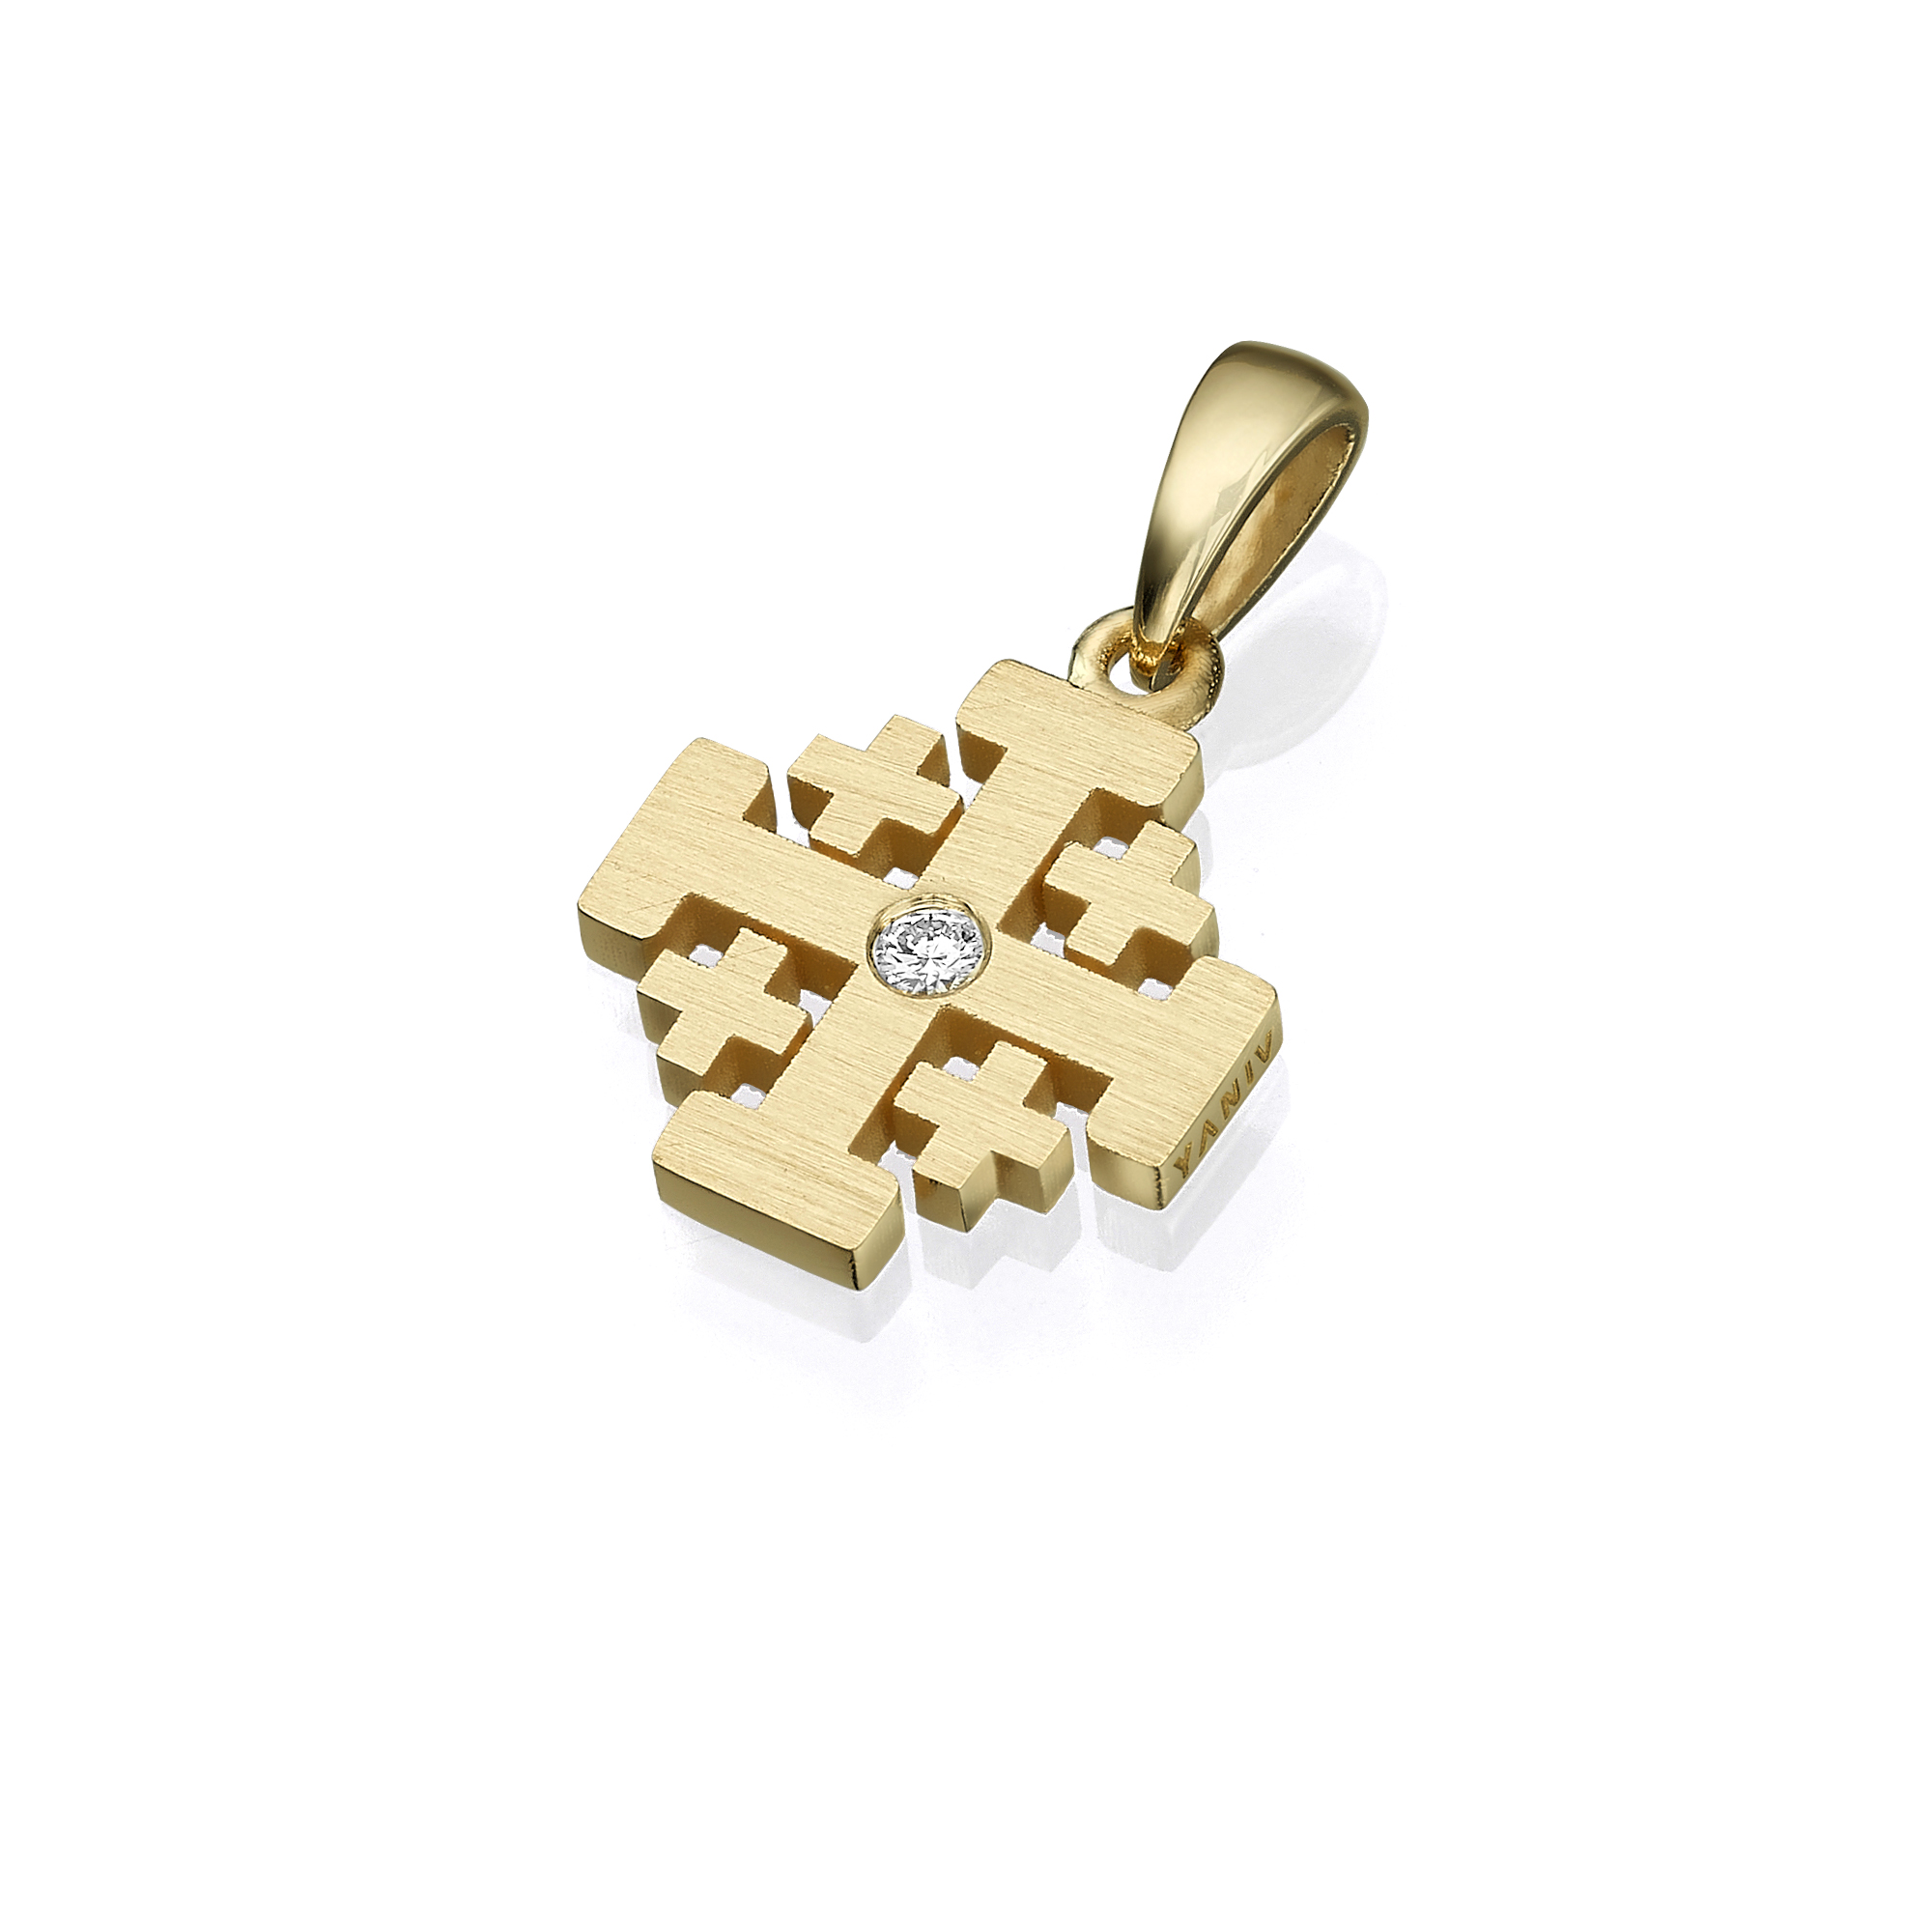 Jerusalem cross necklace - Yaniv Fine Jewelry